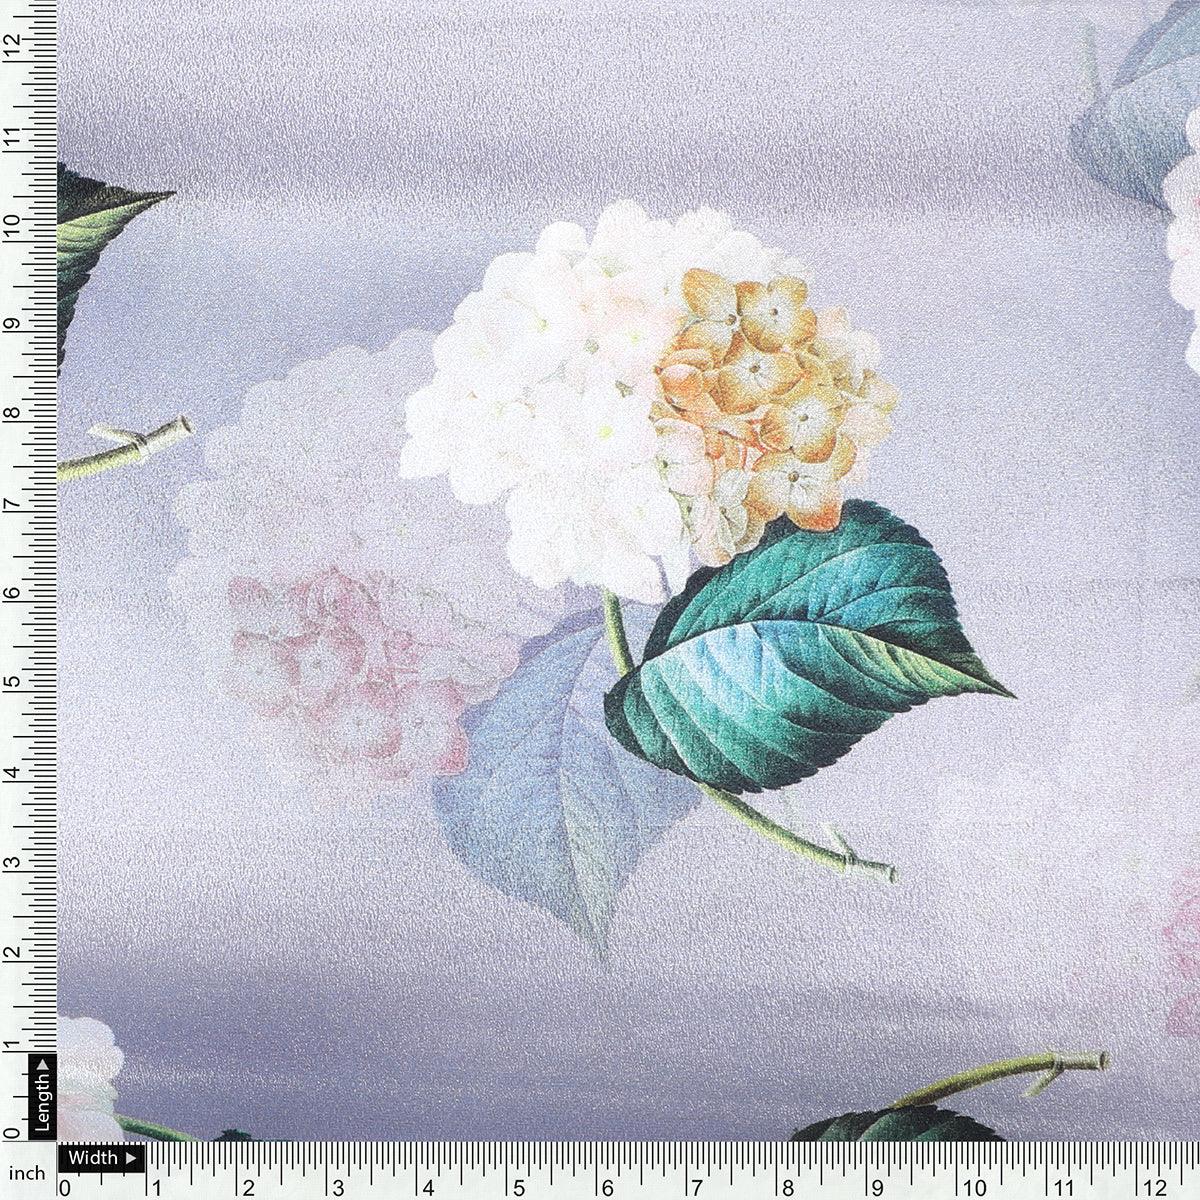 Peach Flower Printed Silk Crepe Fabric Material - FAB VOGUE Studio®